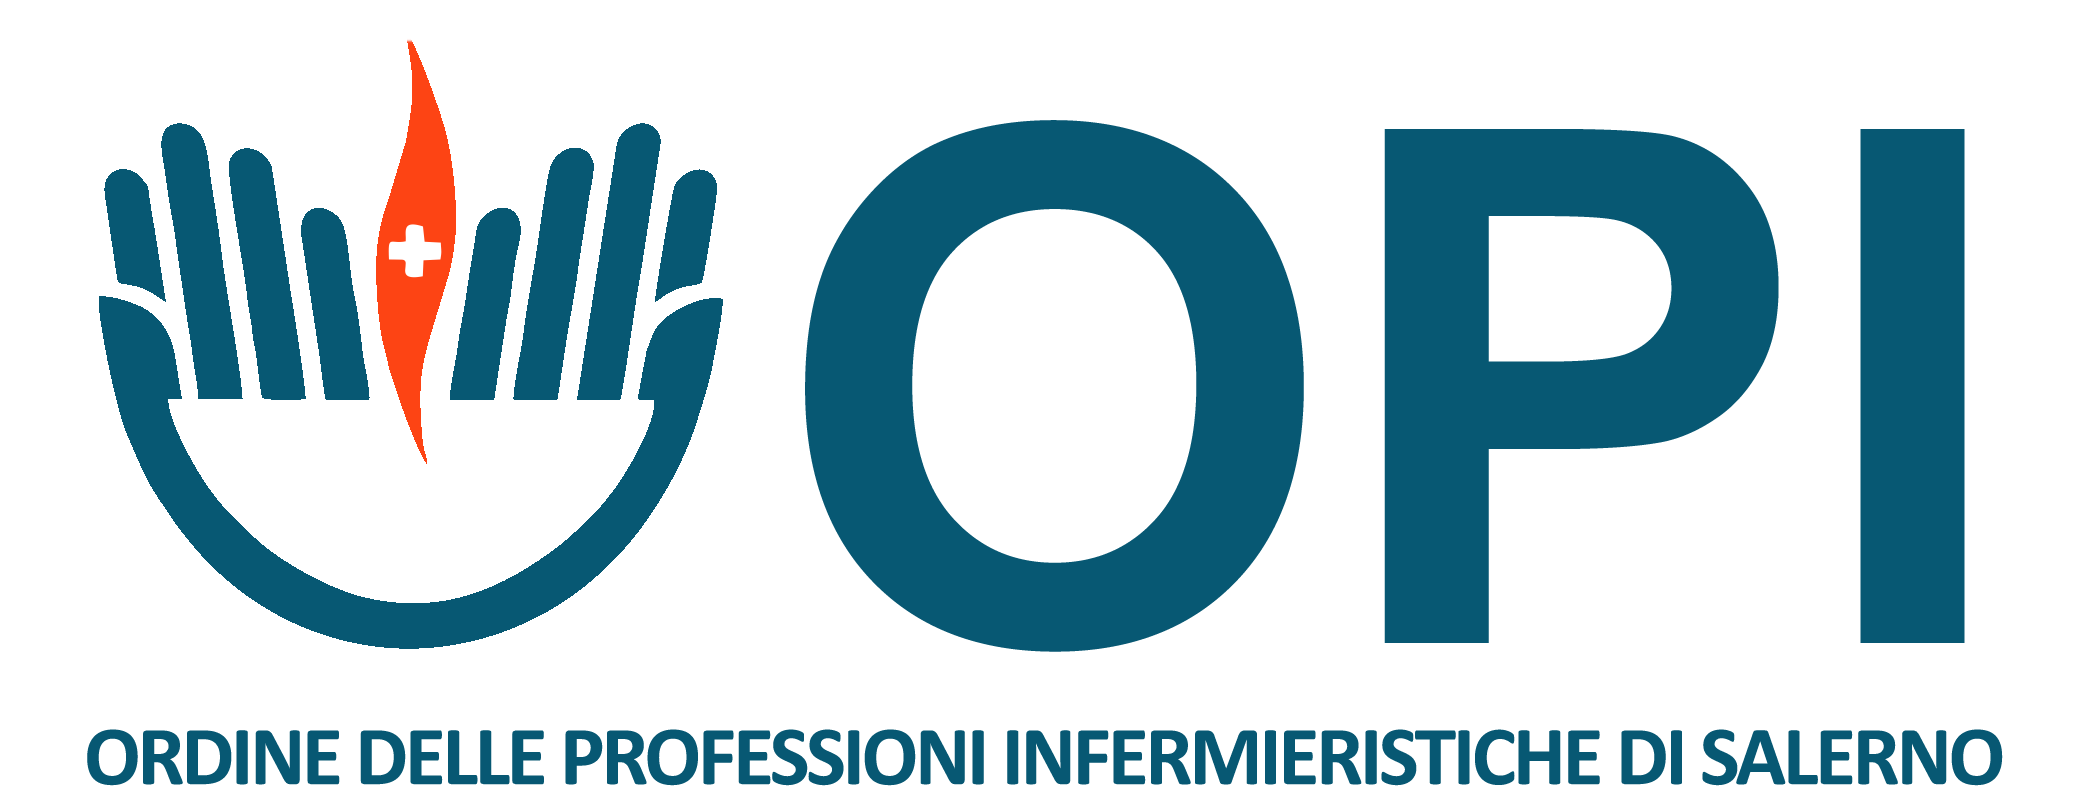 ircomputer_logo